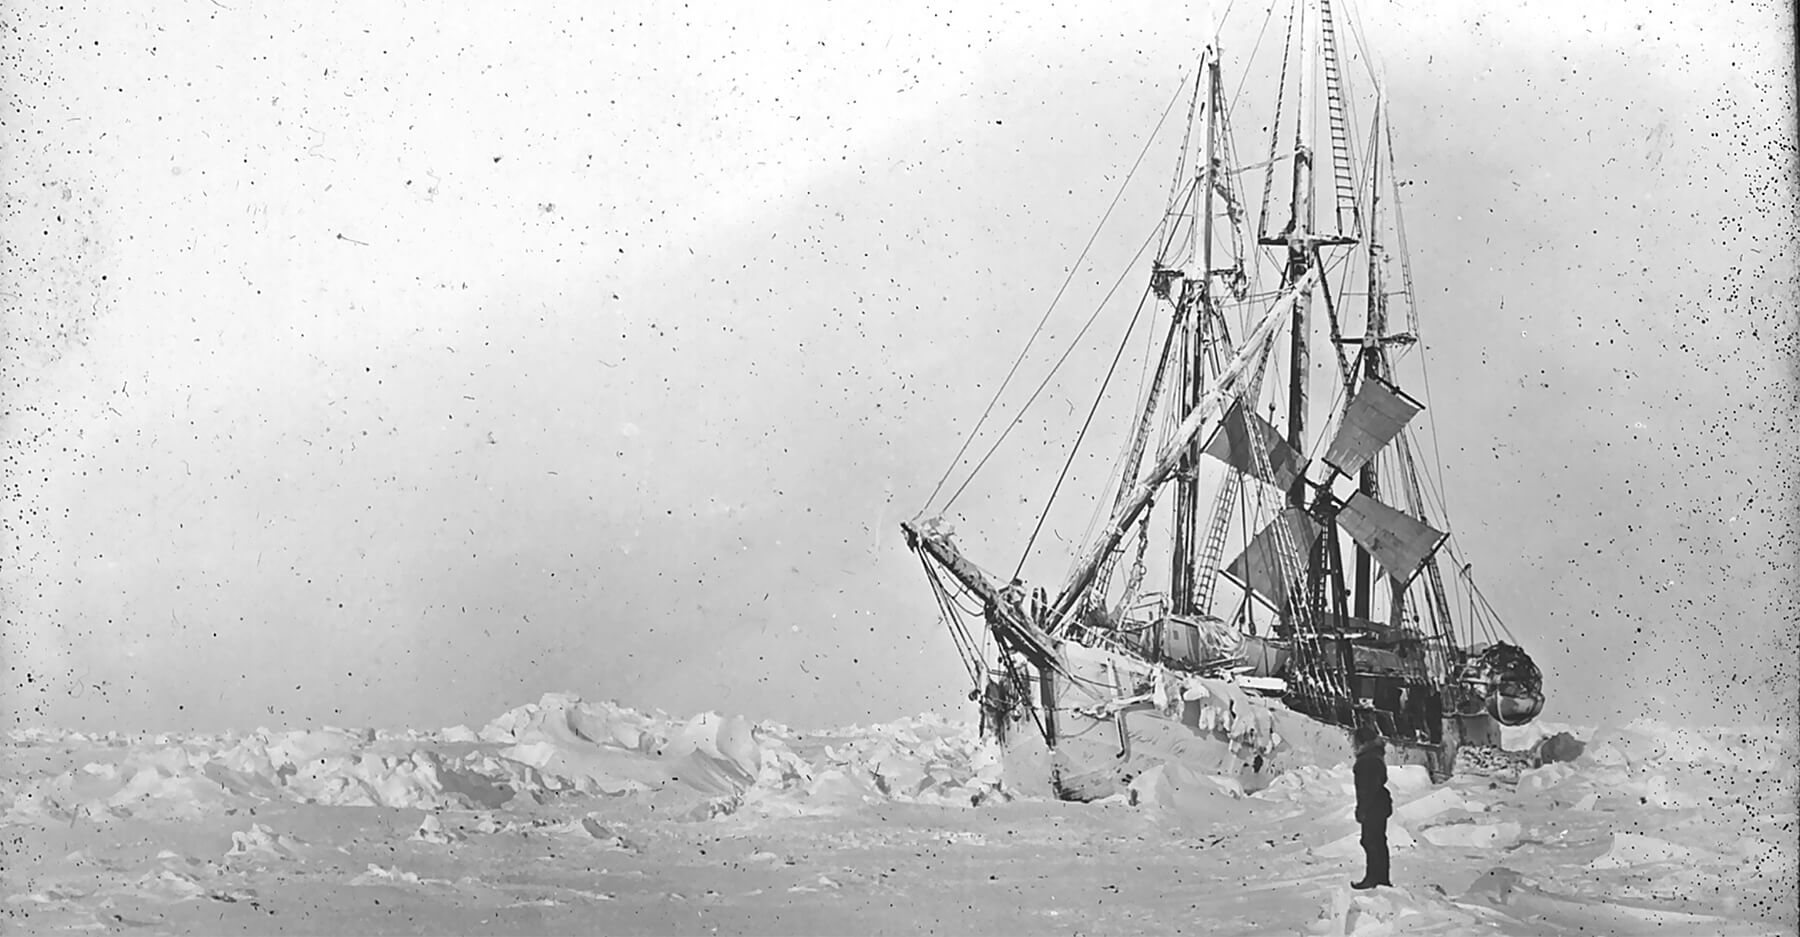 Fram North pole expedition